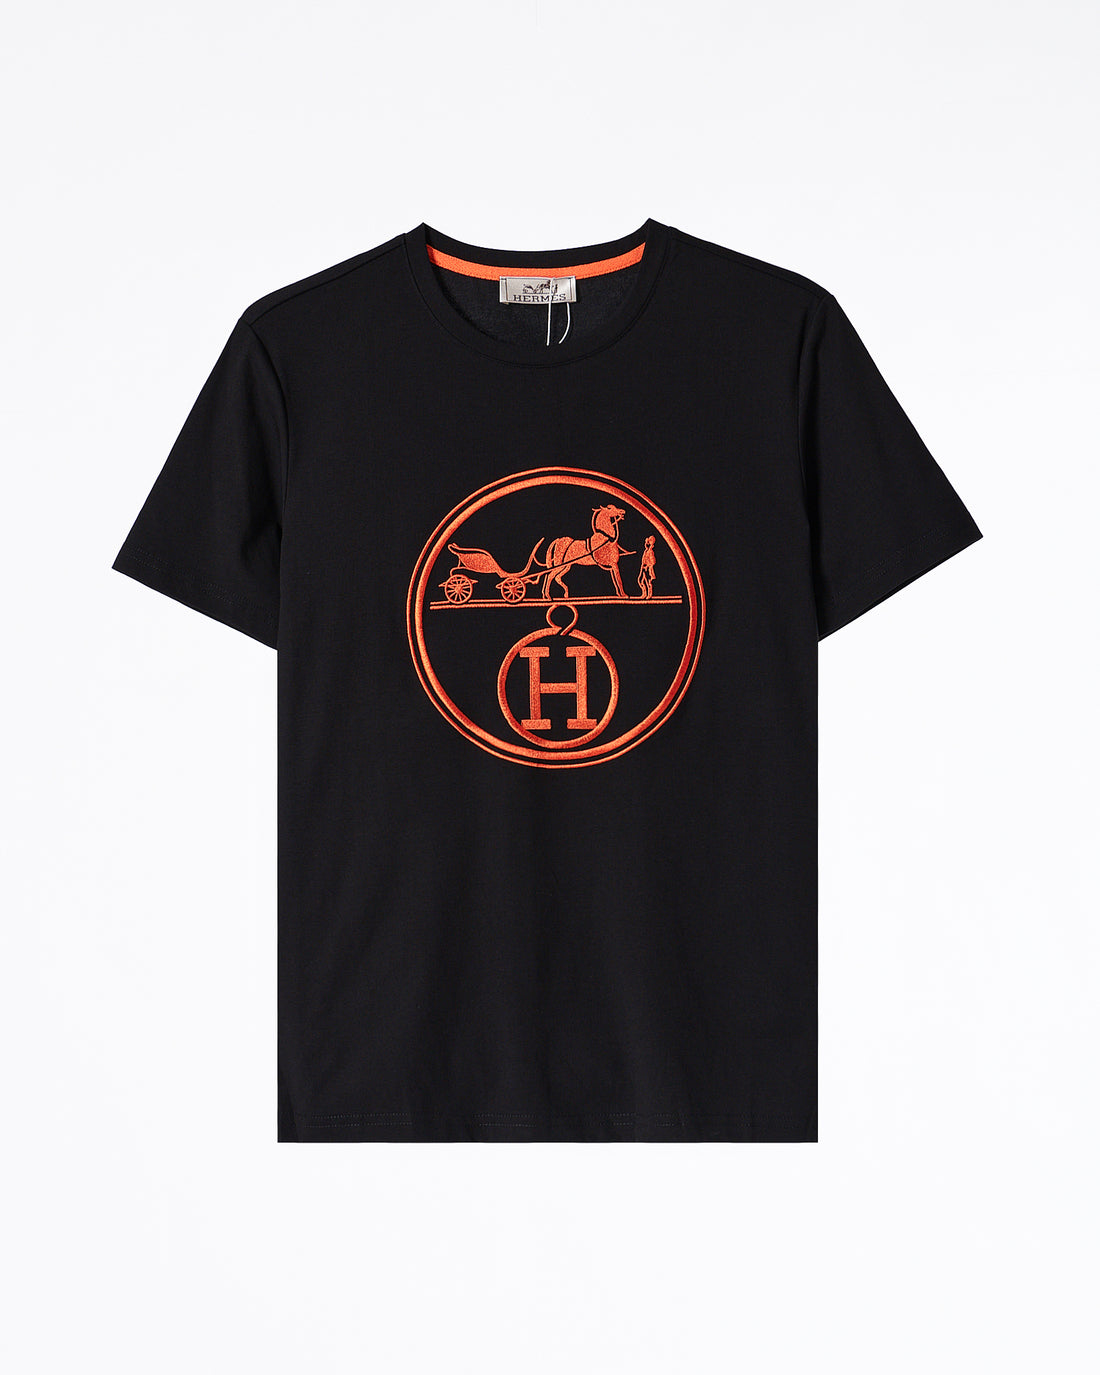 H 로고 자수 남성 티셔츠 55.90